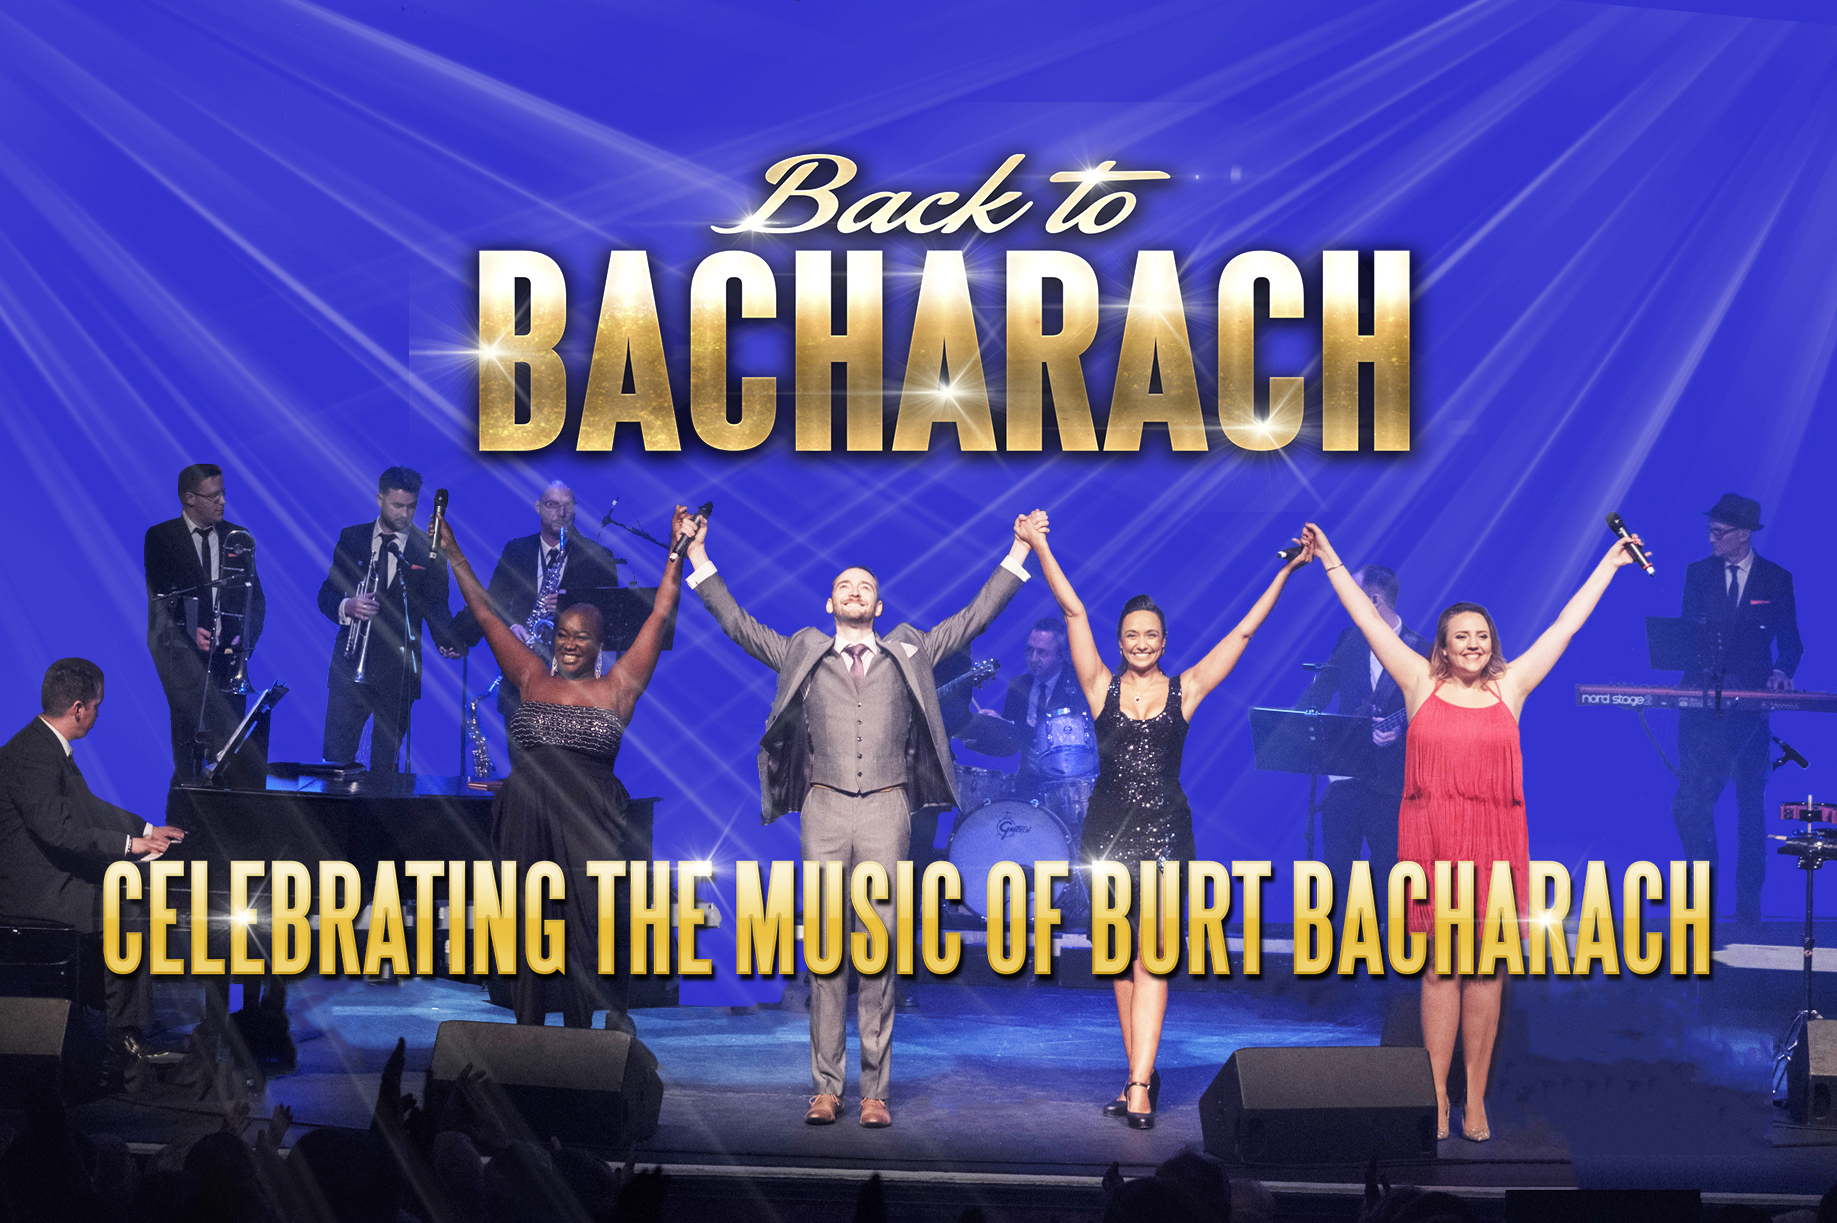 Back to Bacharach 🗓